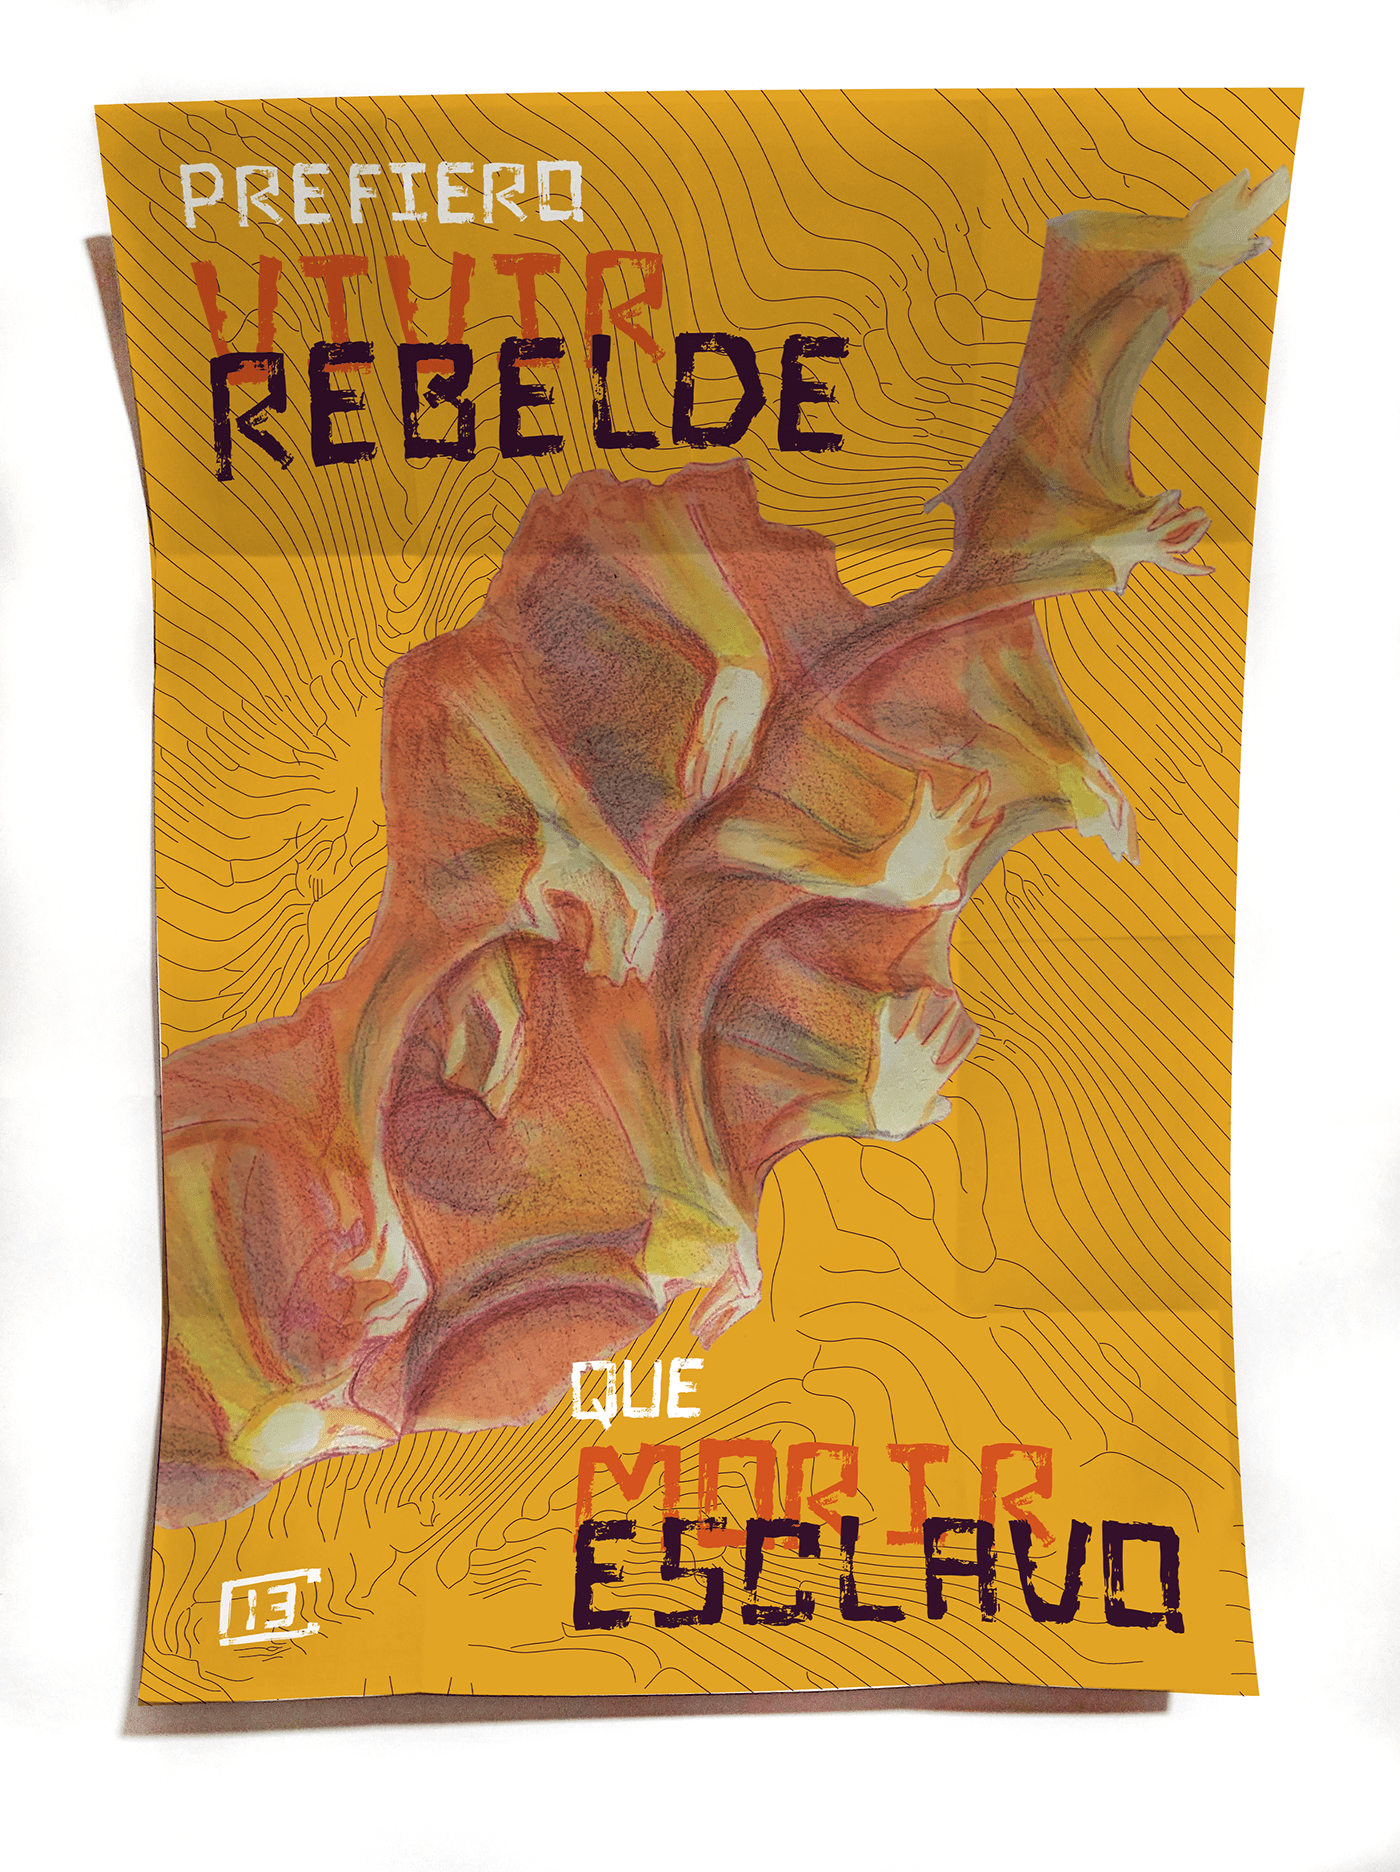 artist ilustracion diseño gráfico disco music artwork Calle13